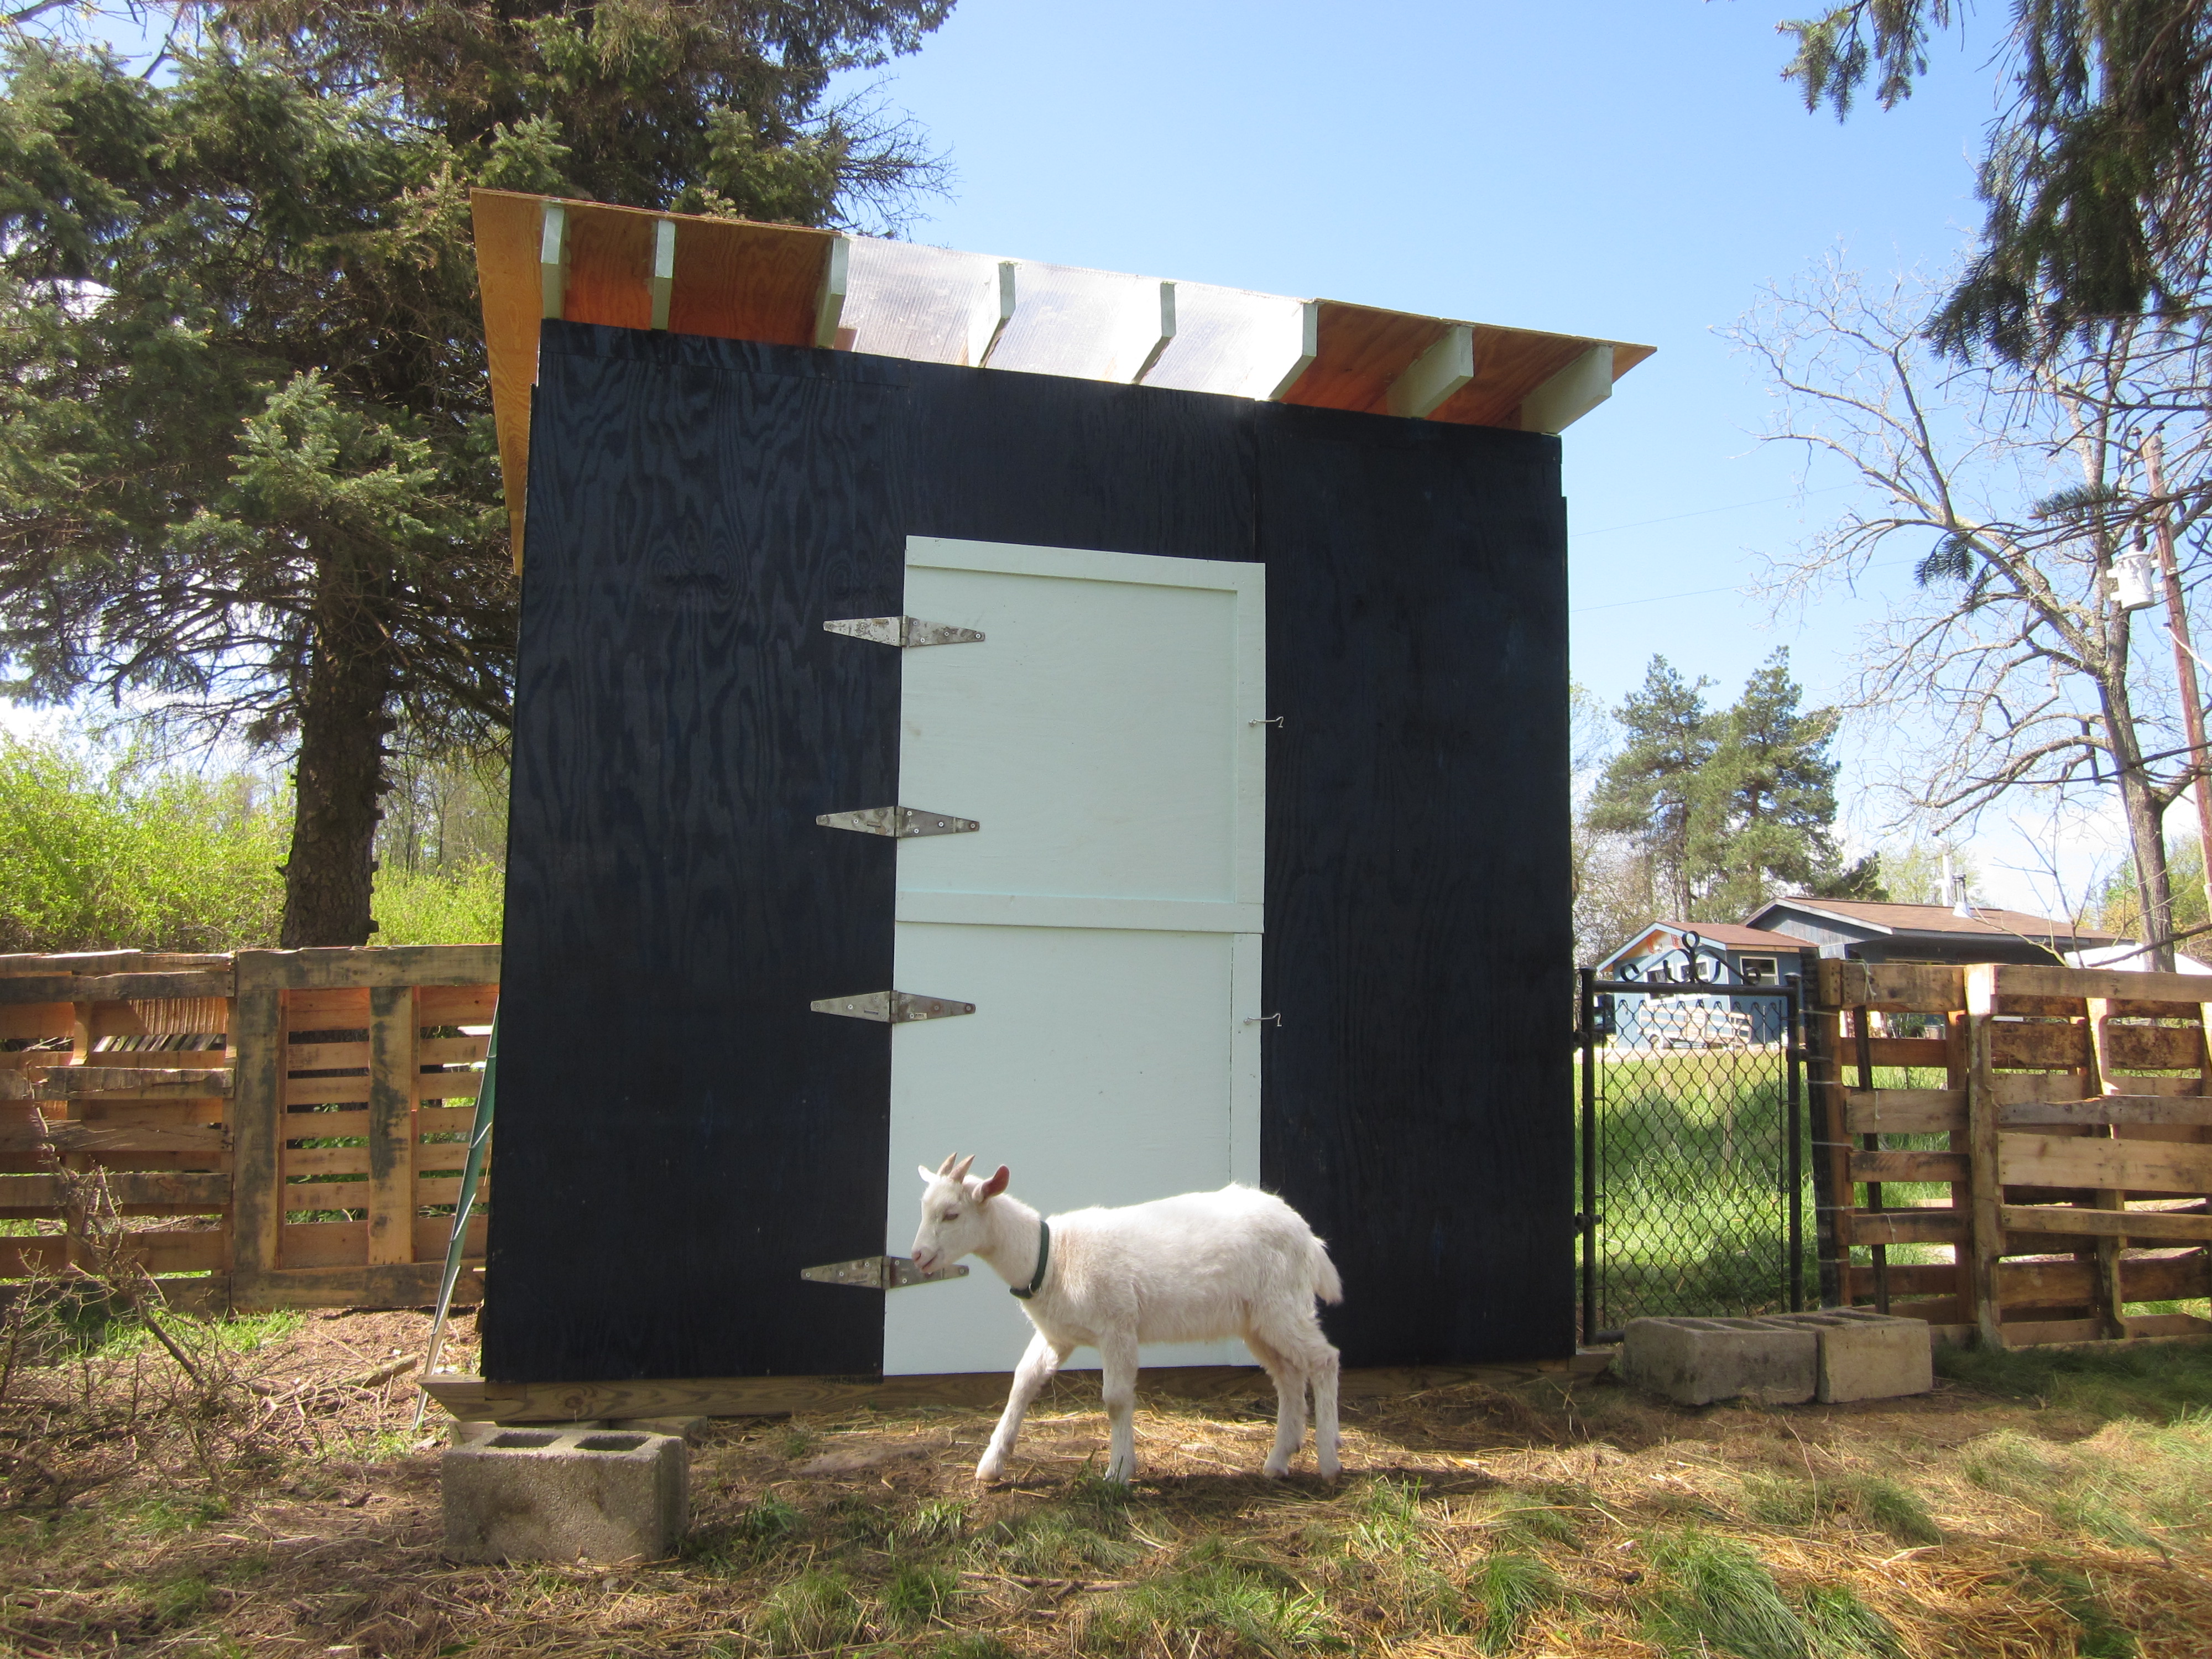 The goat skid barn